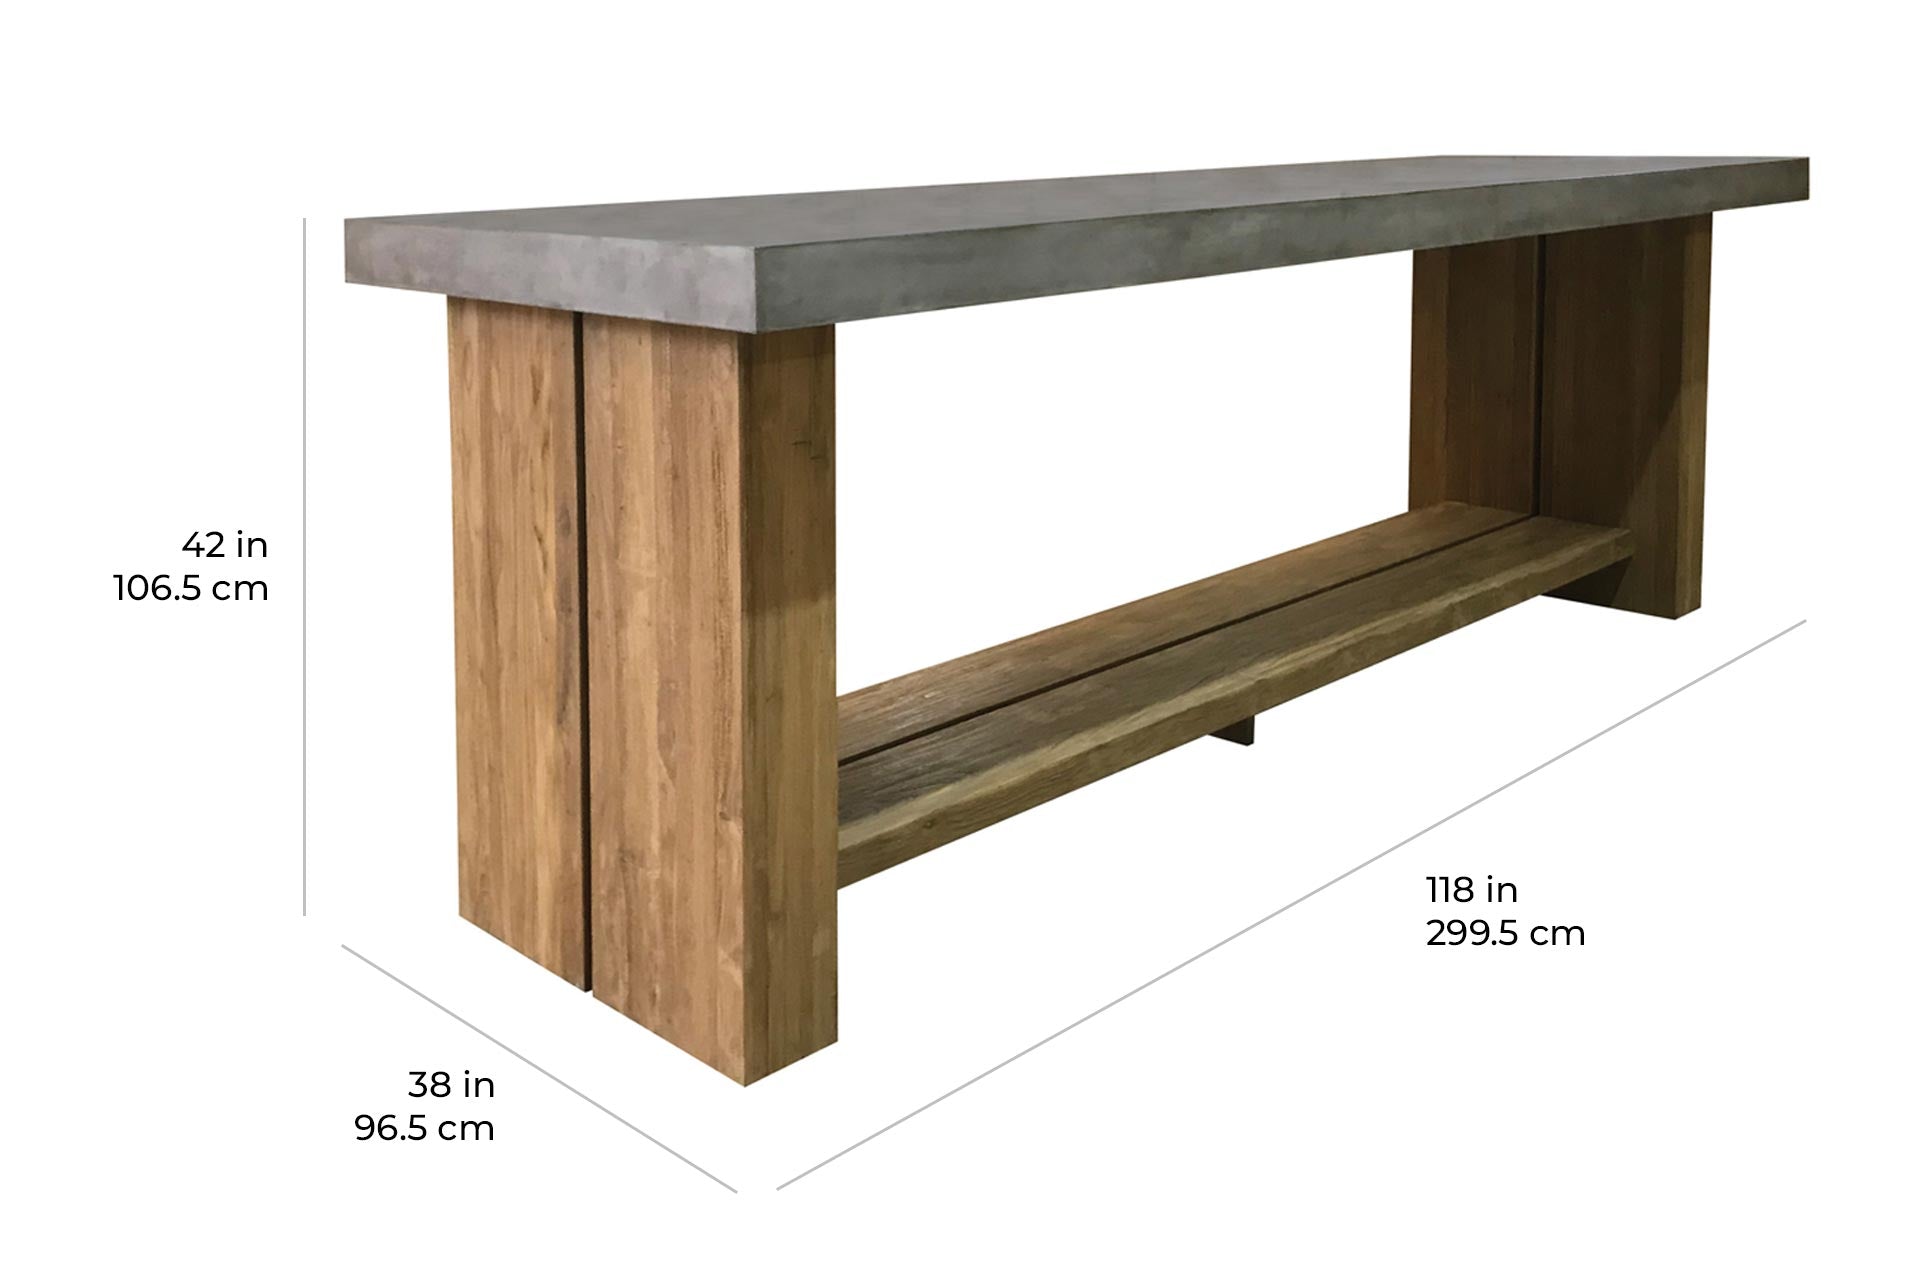 Mykonos Teak and Concrete Bar Table - Slate Grey Outdoor Bar Table